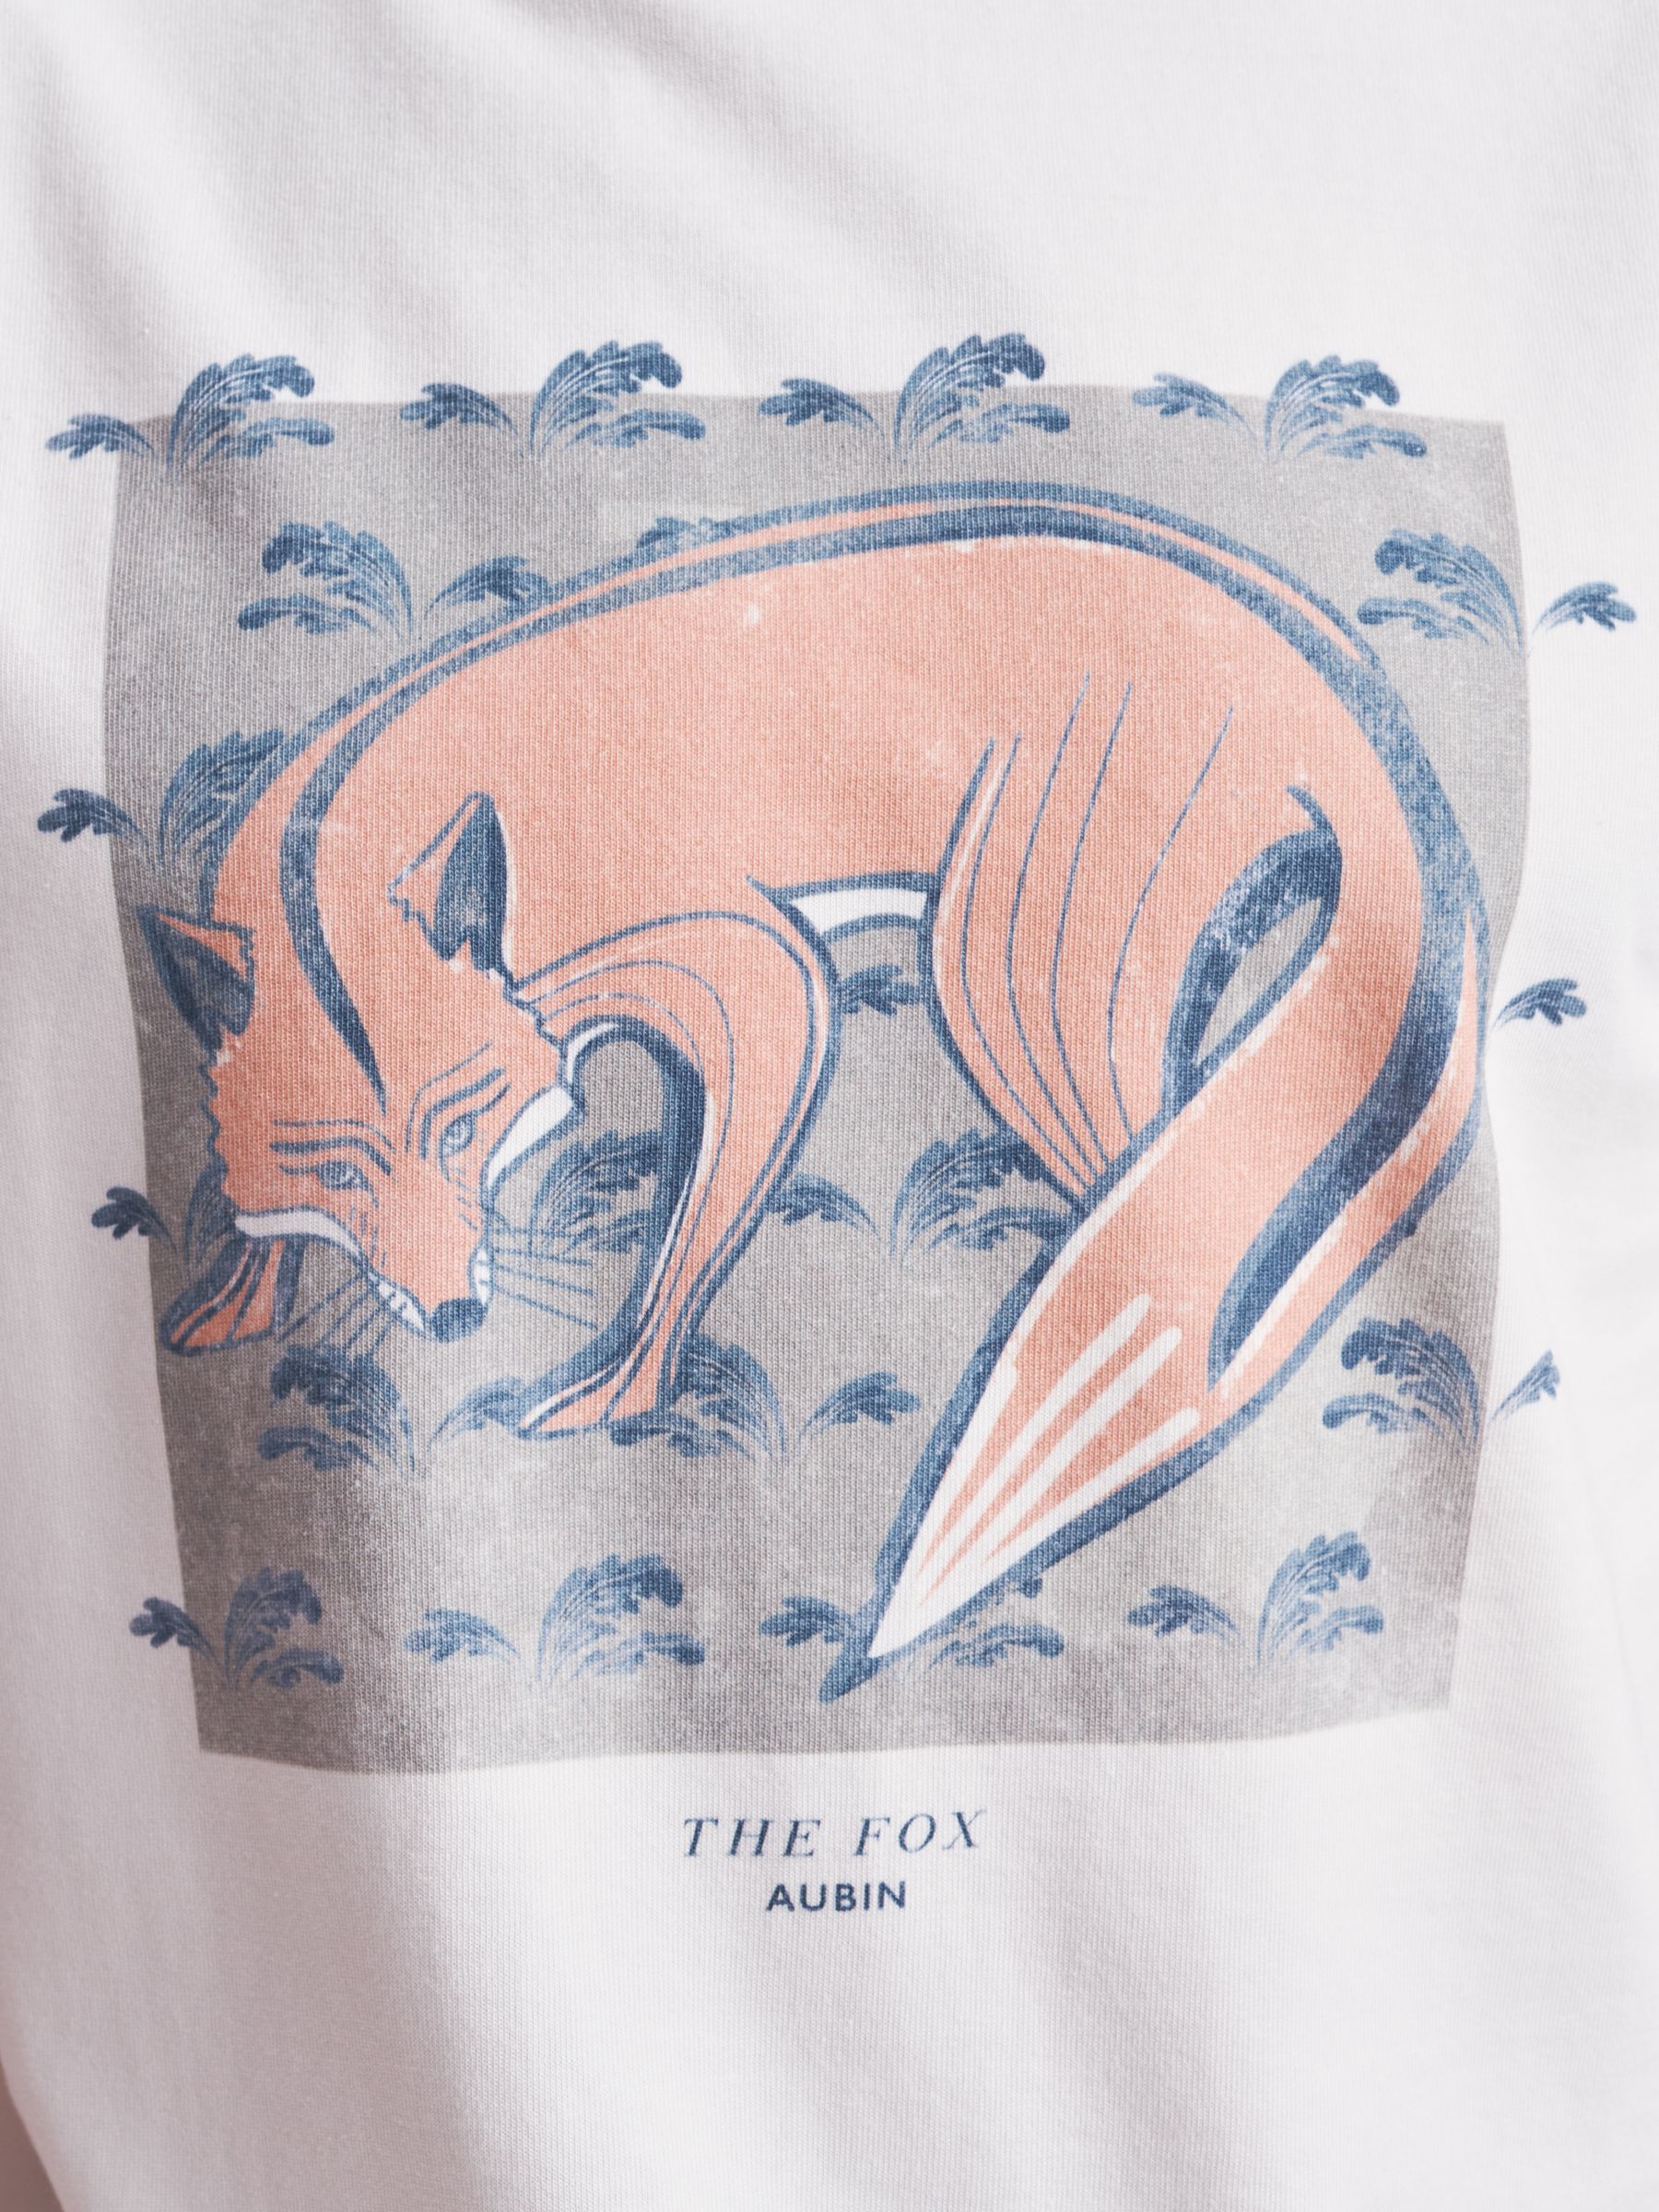 Aubin Newburgh Relaxed Graphic T-Shirt, Fox Print, S